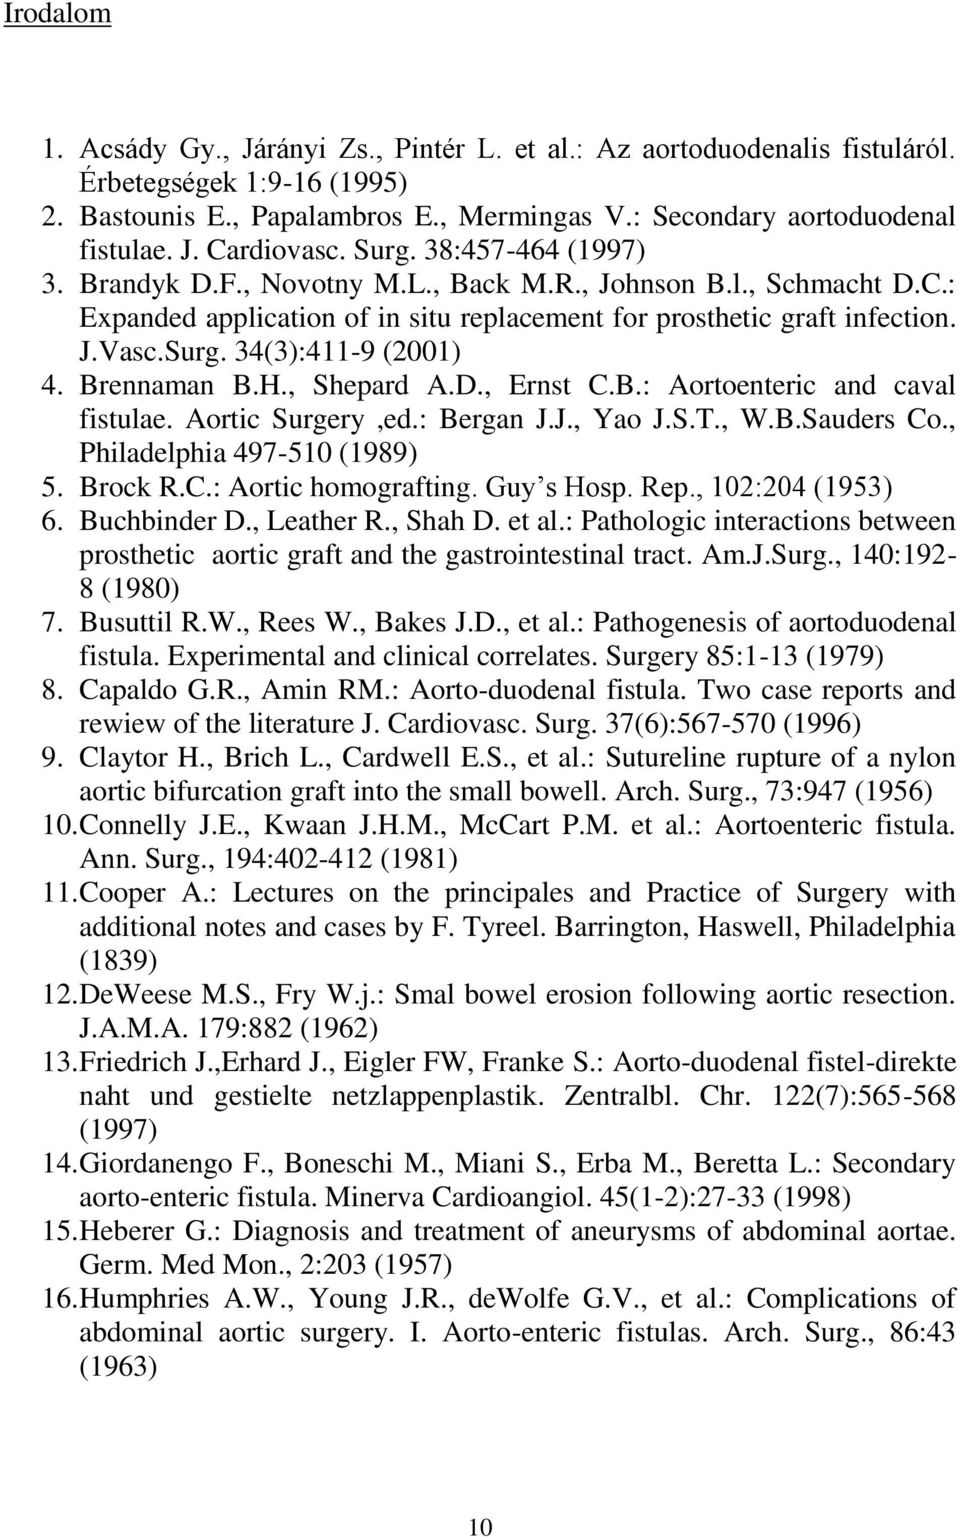 Brennaman B.H., Shepard A.D., Ernst C.B.: Aortoenteric and caval fistulae. Aortic Surgery,ed.: Bergan J.J., Yao J.S.T., W.B.Sauders Co., Philadelphia 497-510 (1989) 5. Brock R.C.: Aortic homografting.